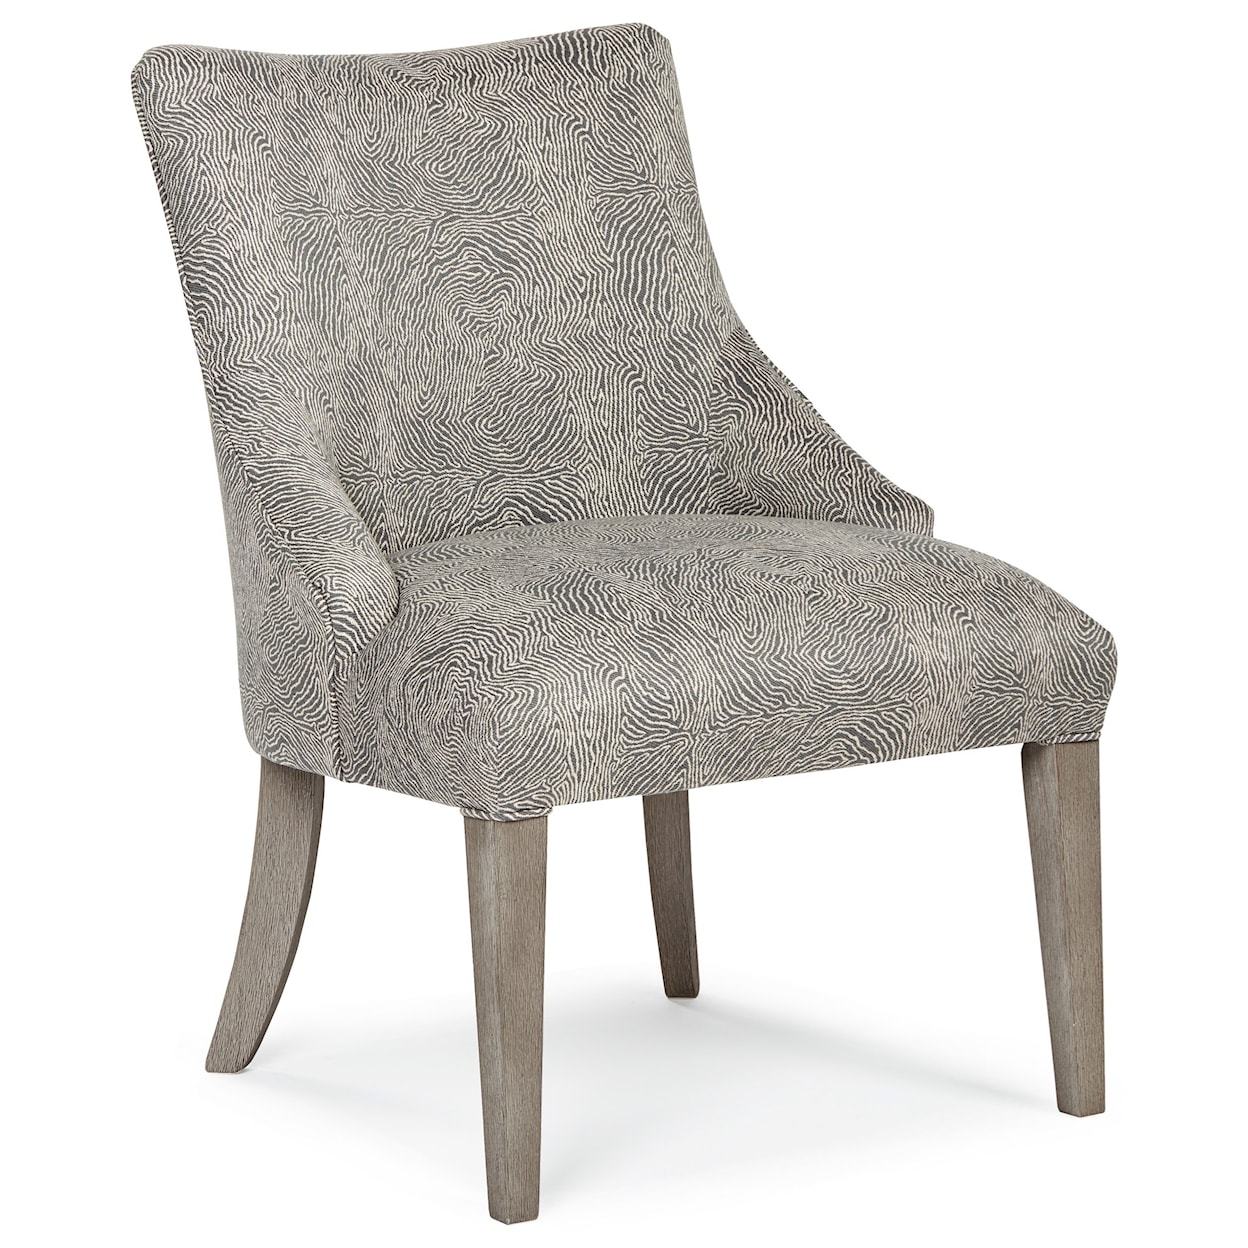 Best Home Furnishings Elie Side Chair